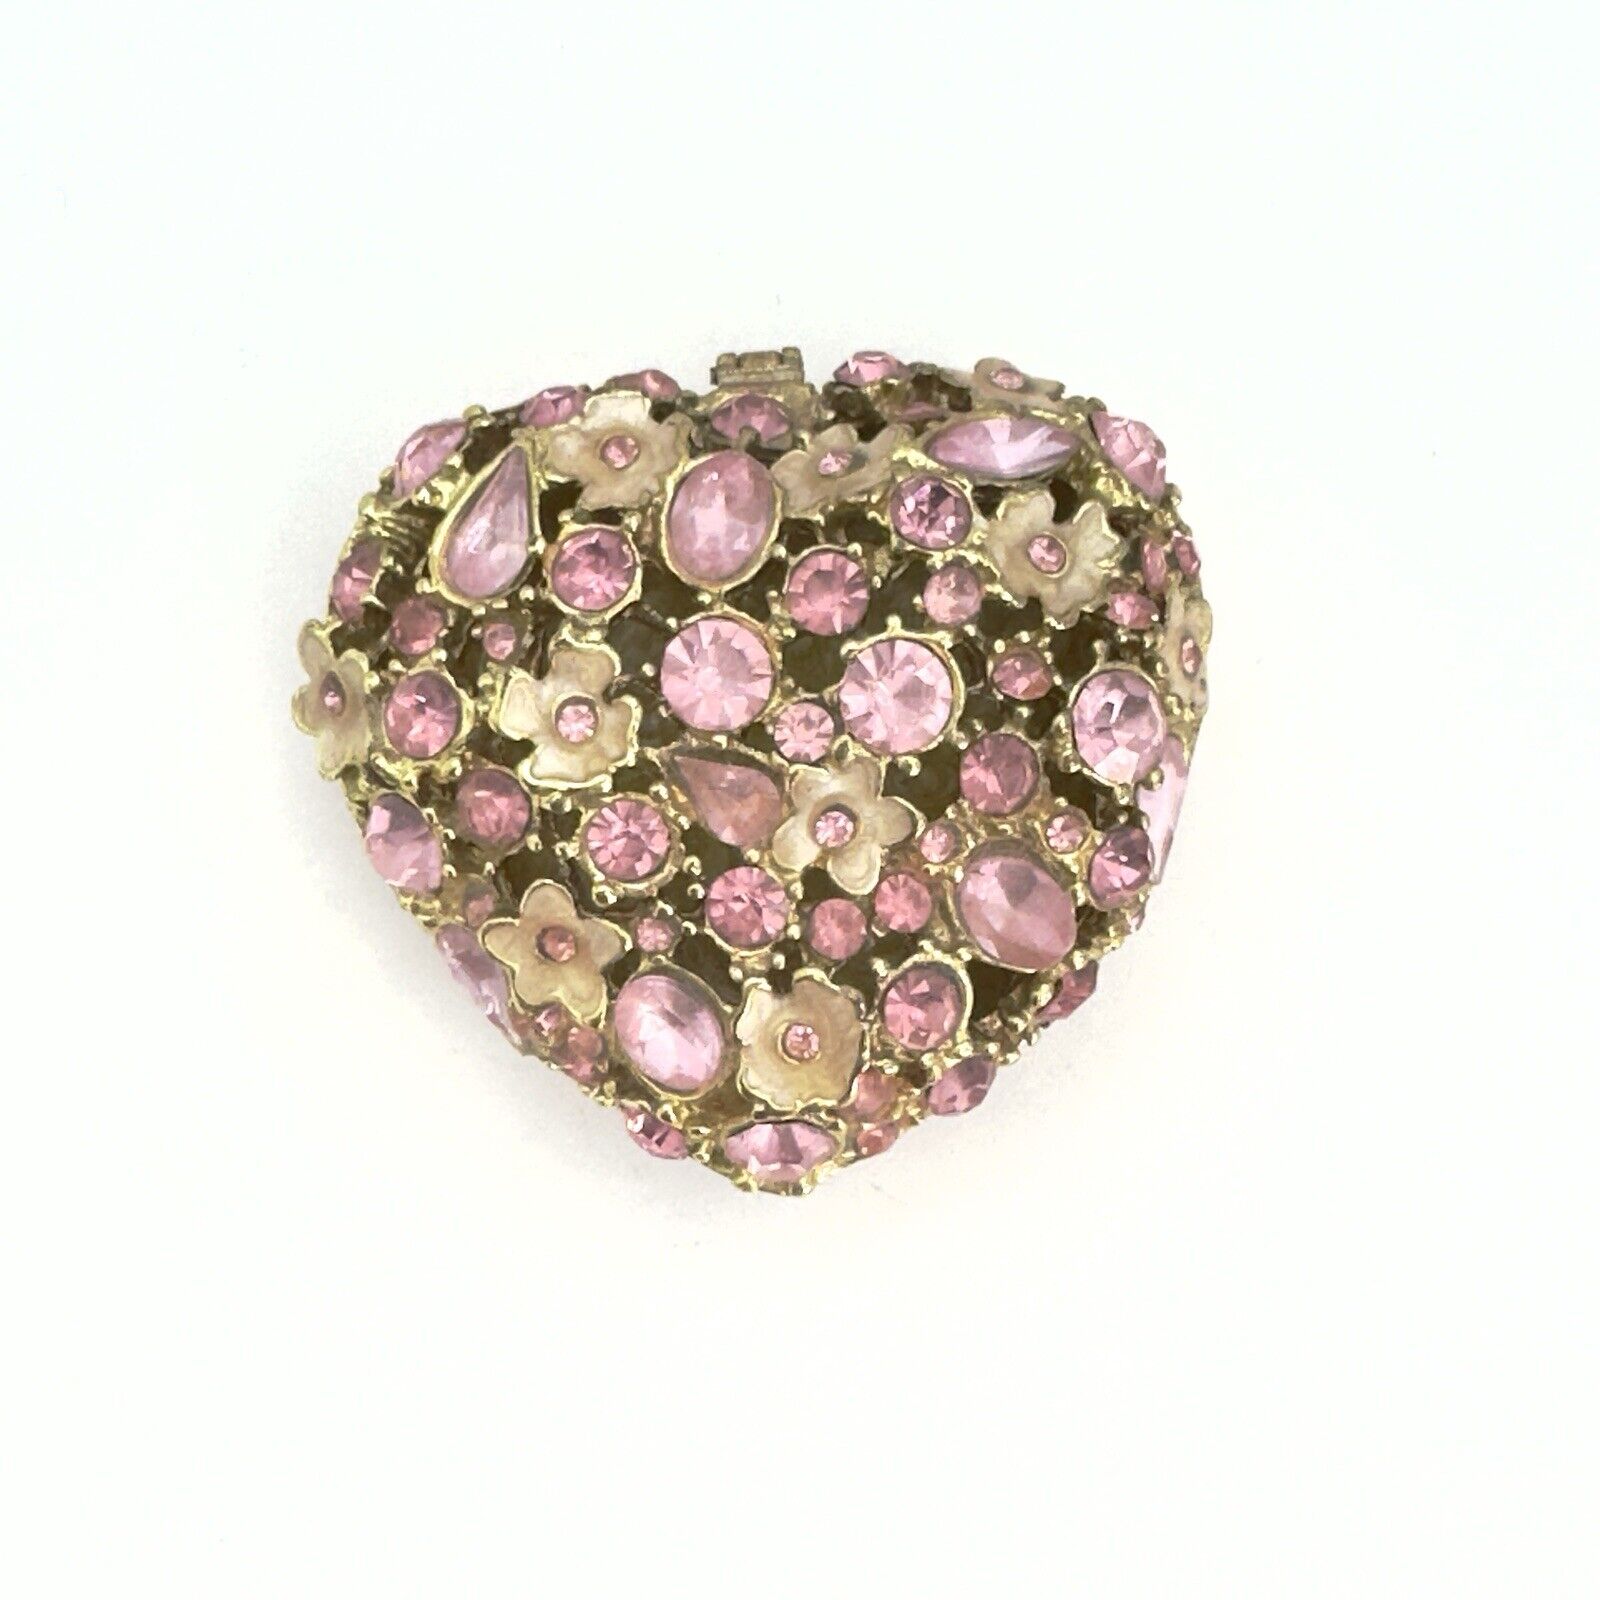 Trinket Box Heart Shaped Floral Pink Rhinestone Magnetic Closure Jewelry